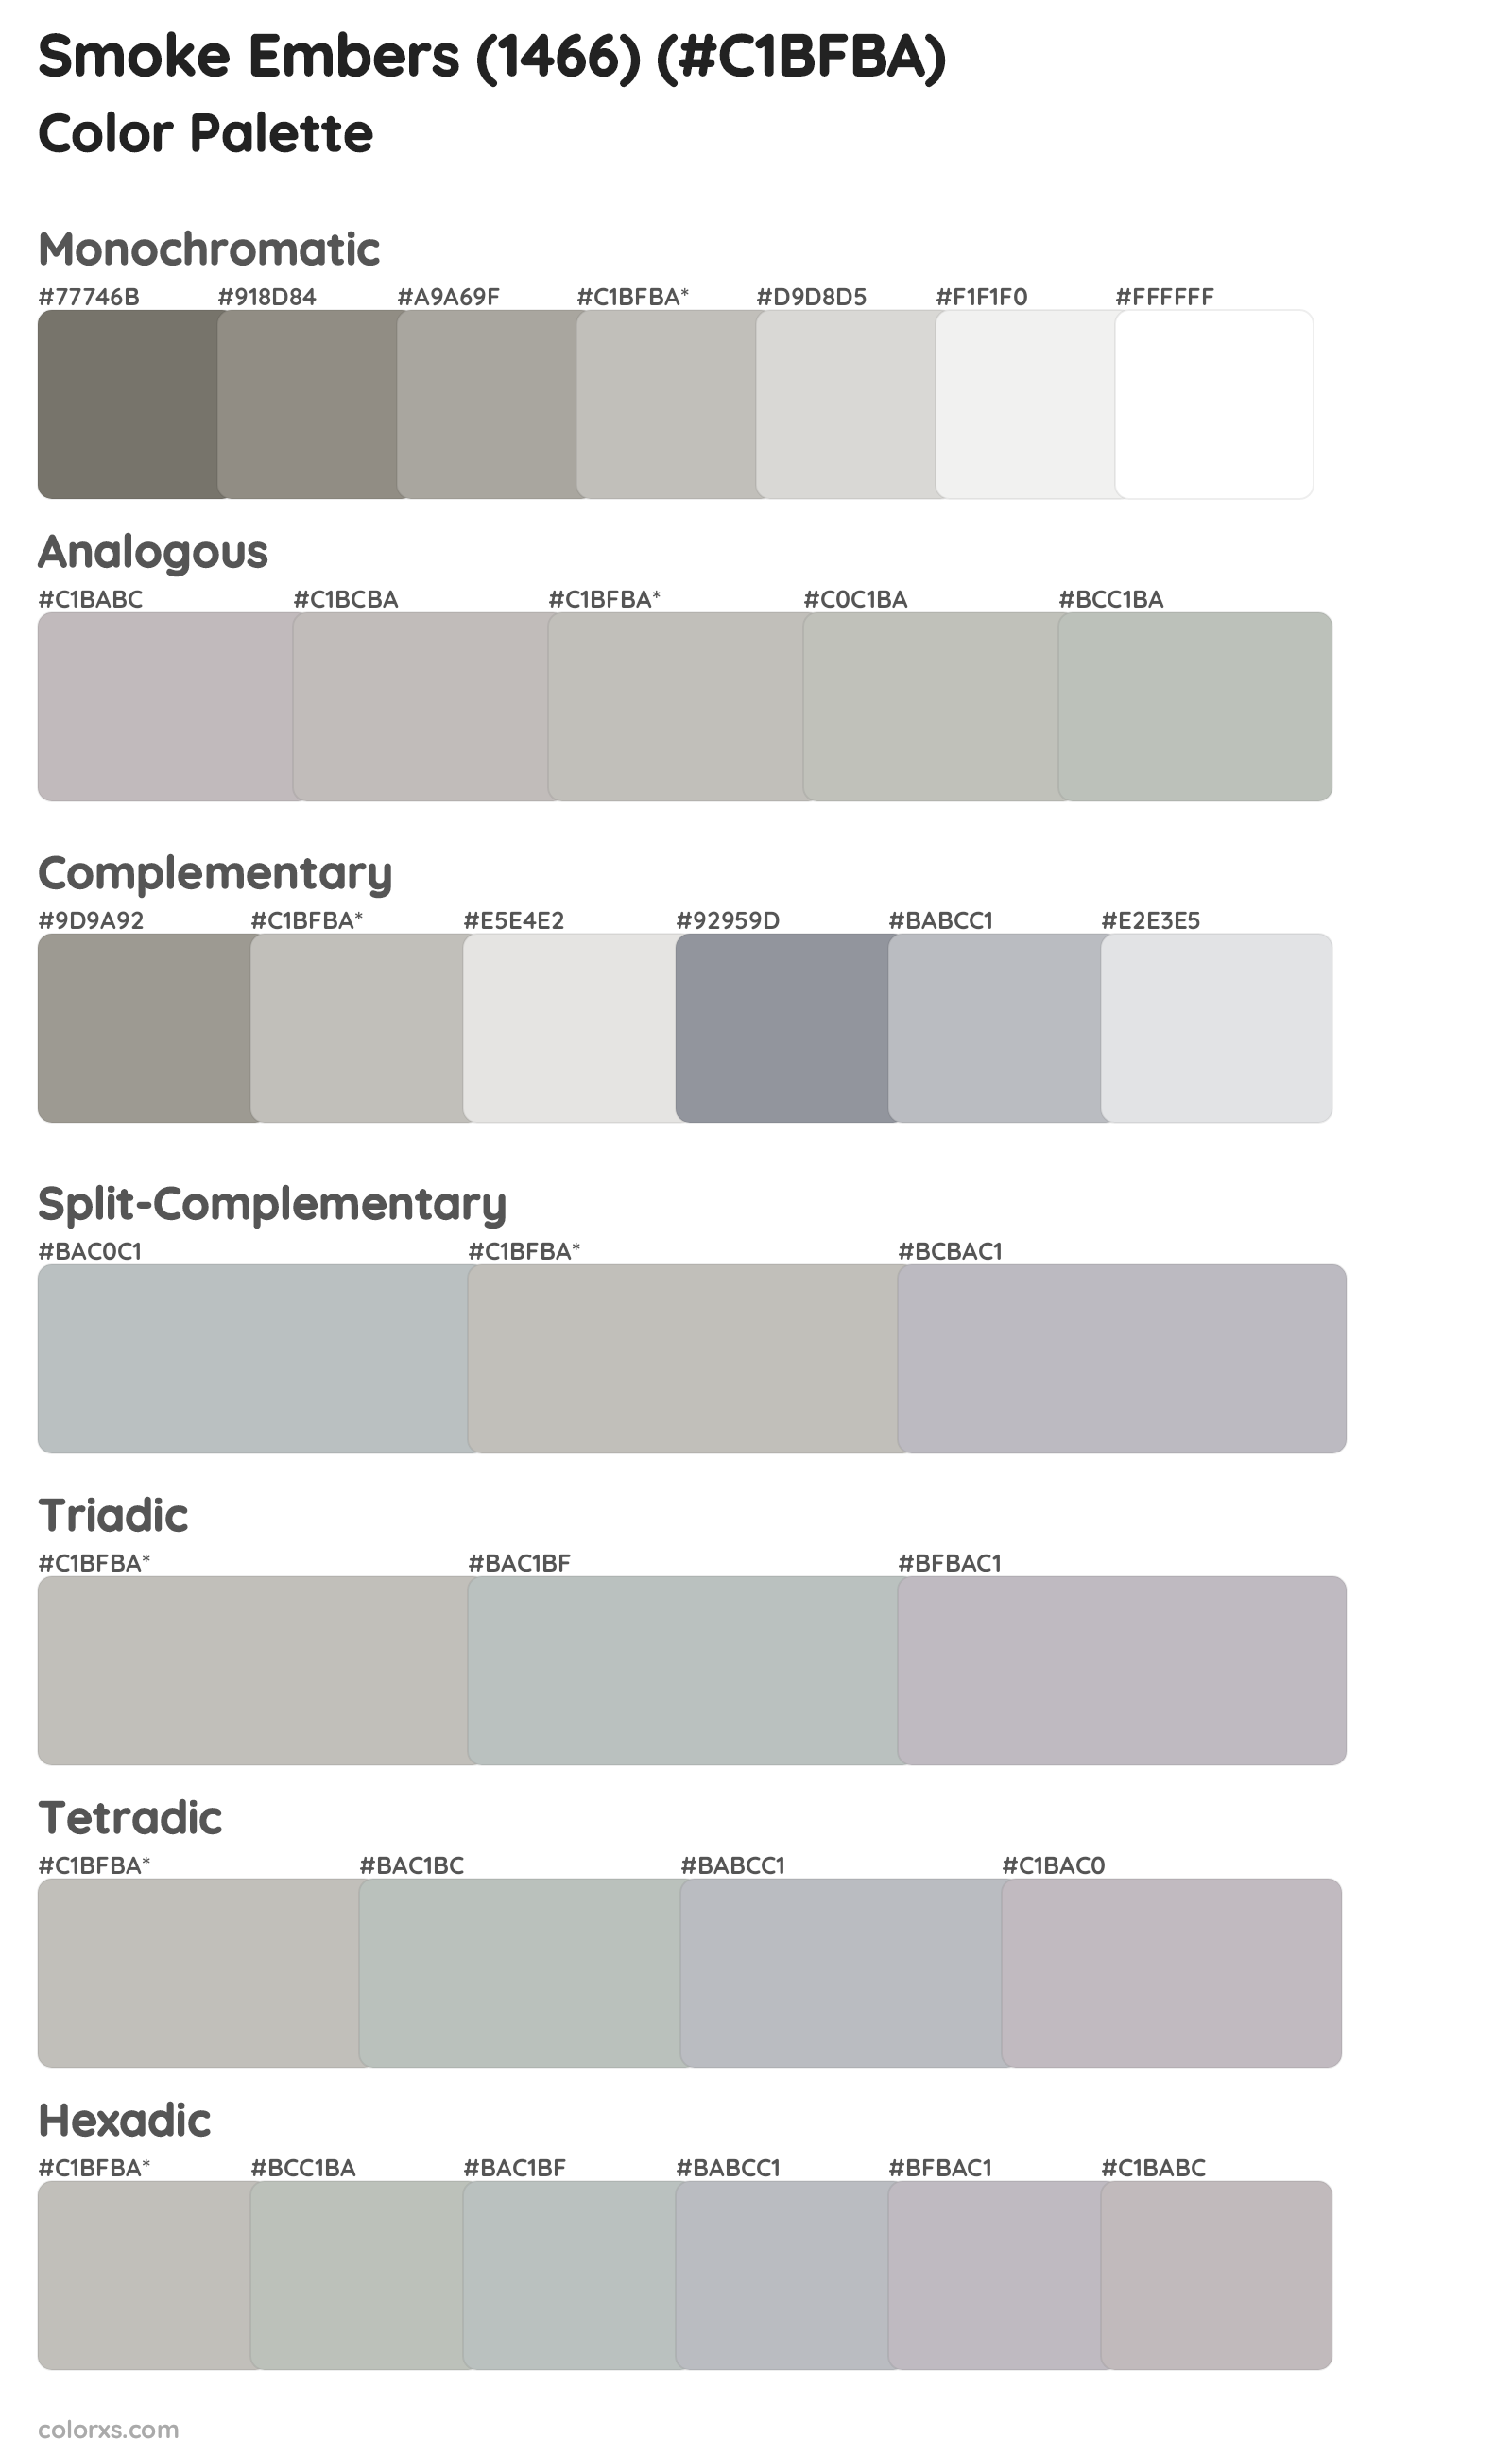 Smoke Embers (1466) Color Scheme Palettes